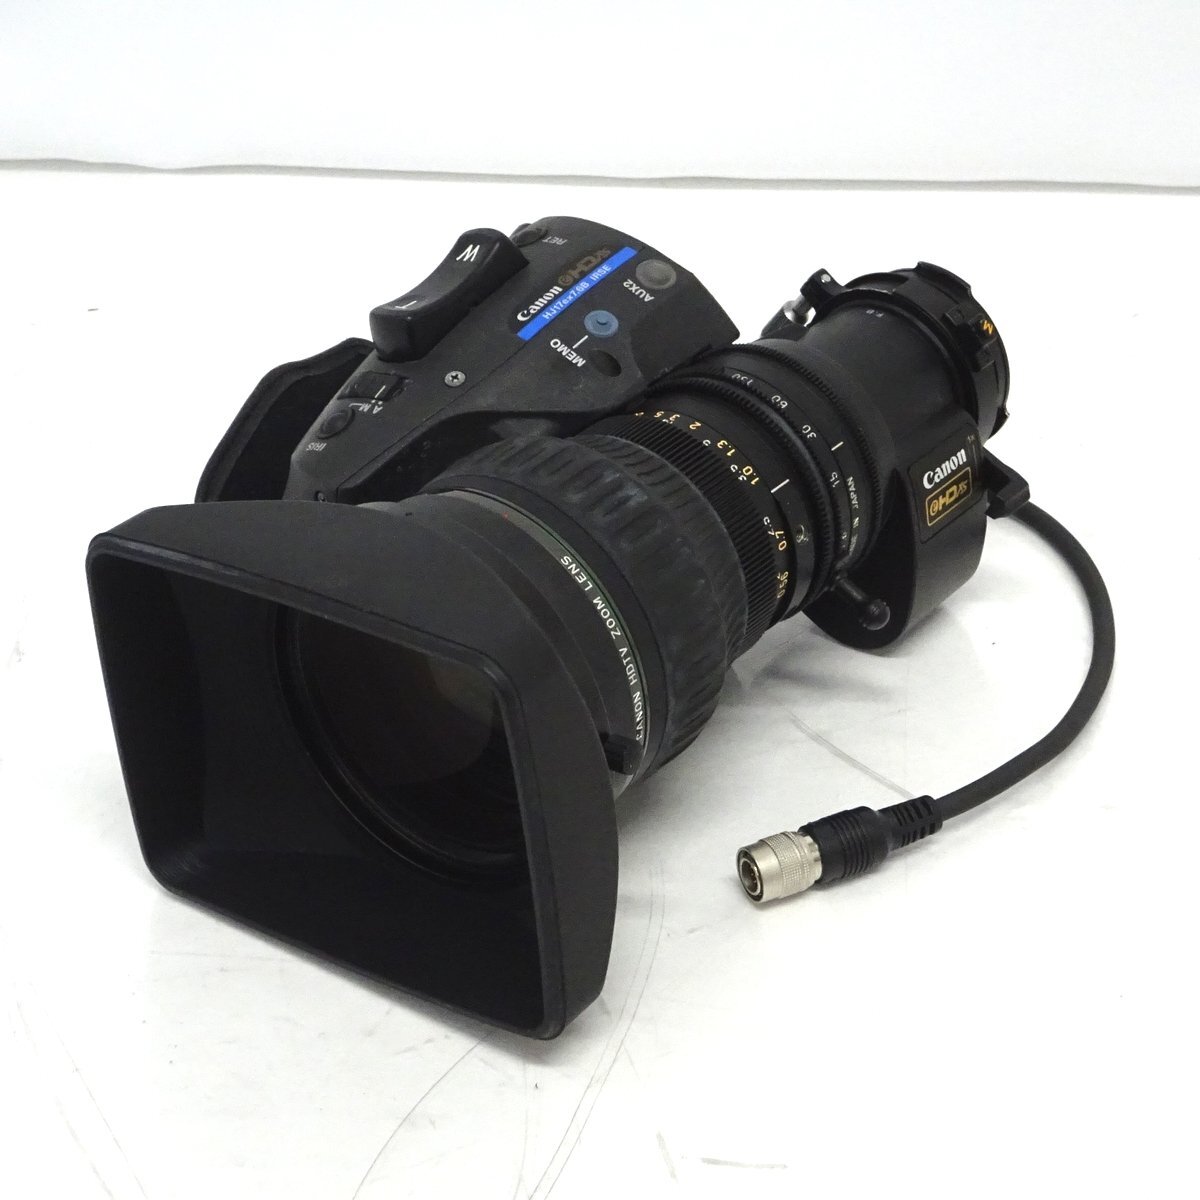 Canon HJ17e×7.6B4 IRSE SX12 2/3型17倍HDズームレンズ（内部にカビあり）【中古/ジャンク】#400518の画像1